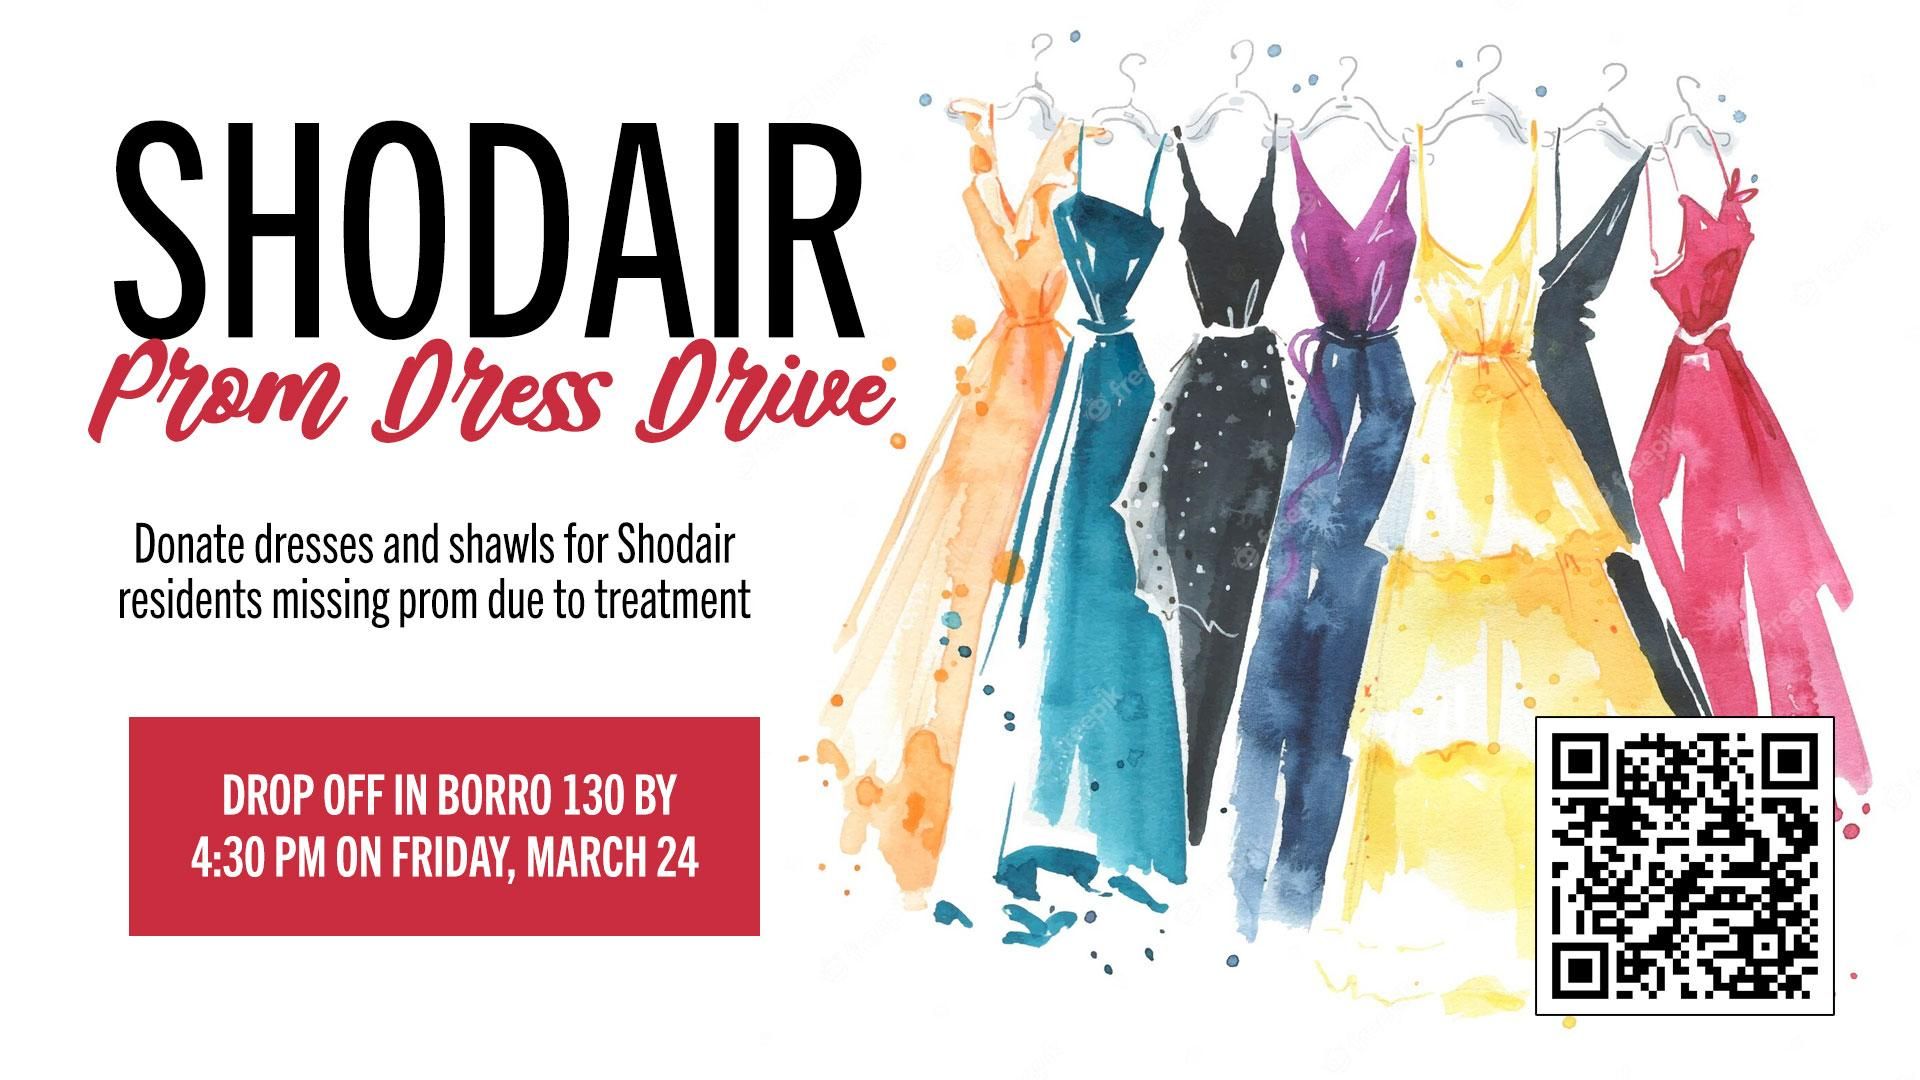 Shodair Prom Dress Drive graphic